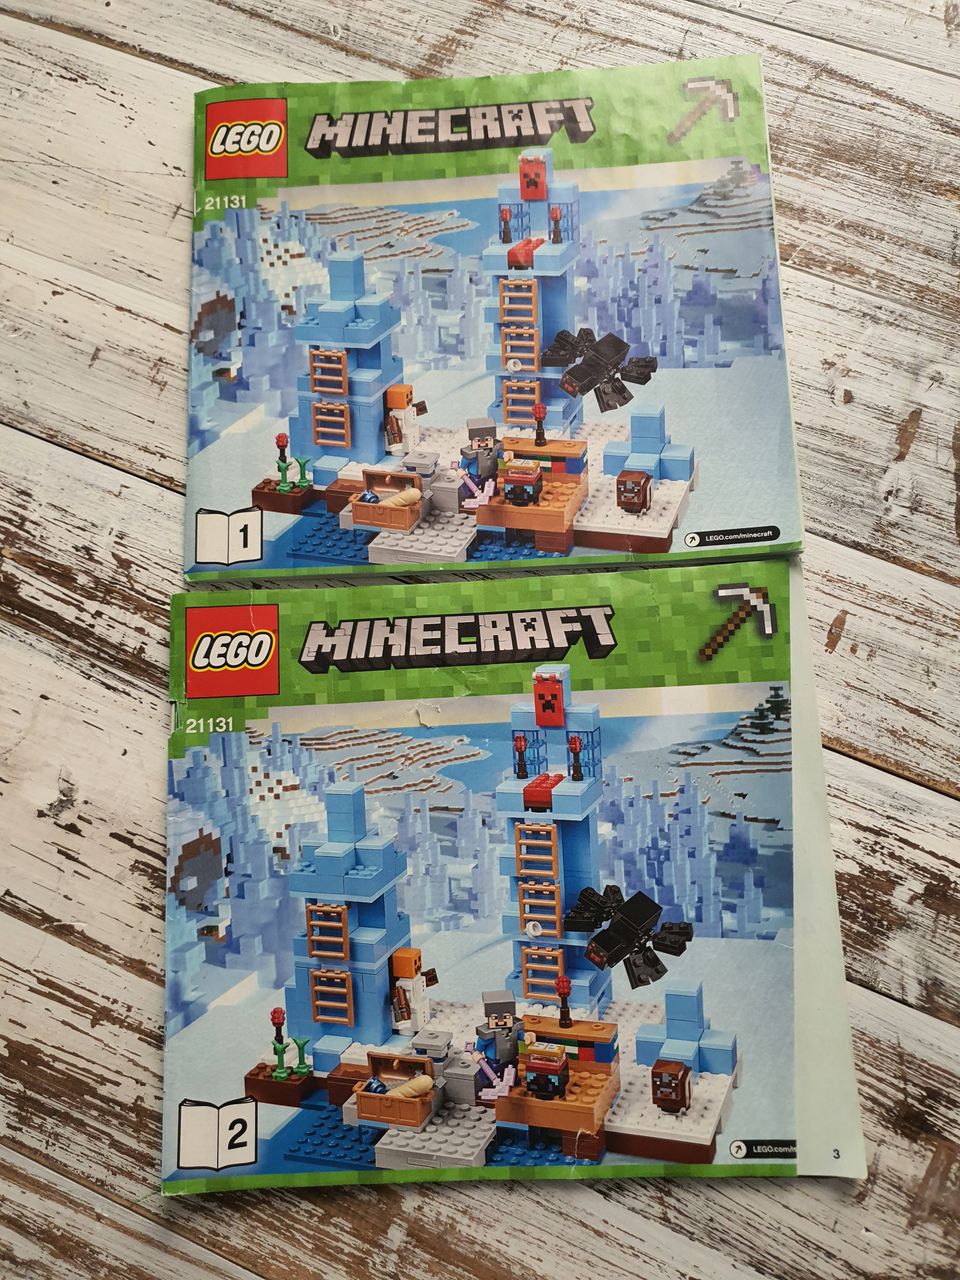 Lego minecraft 21131